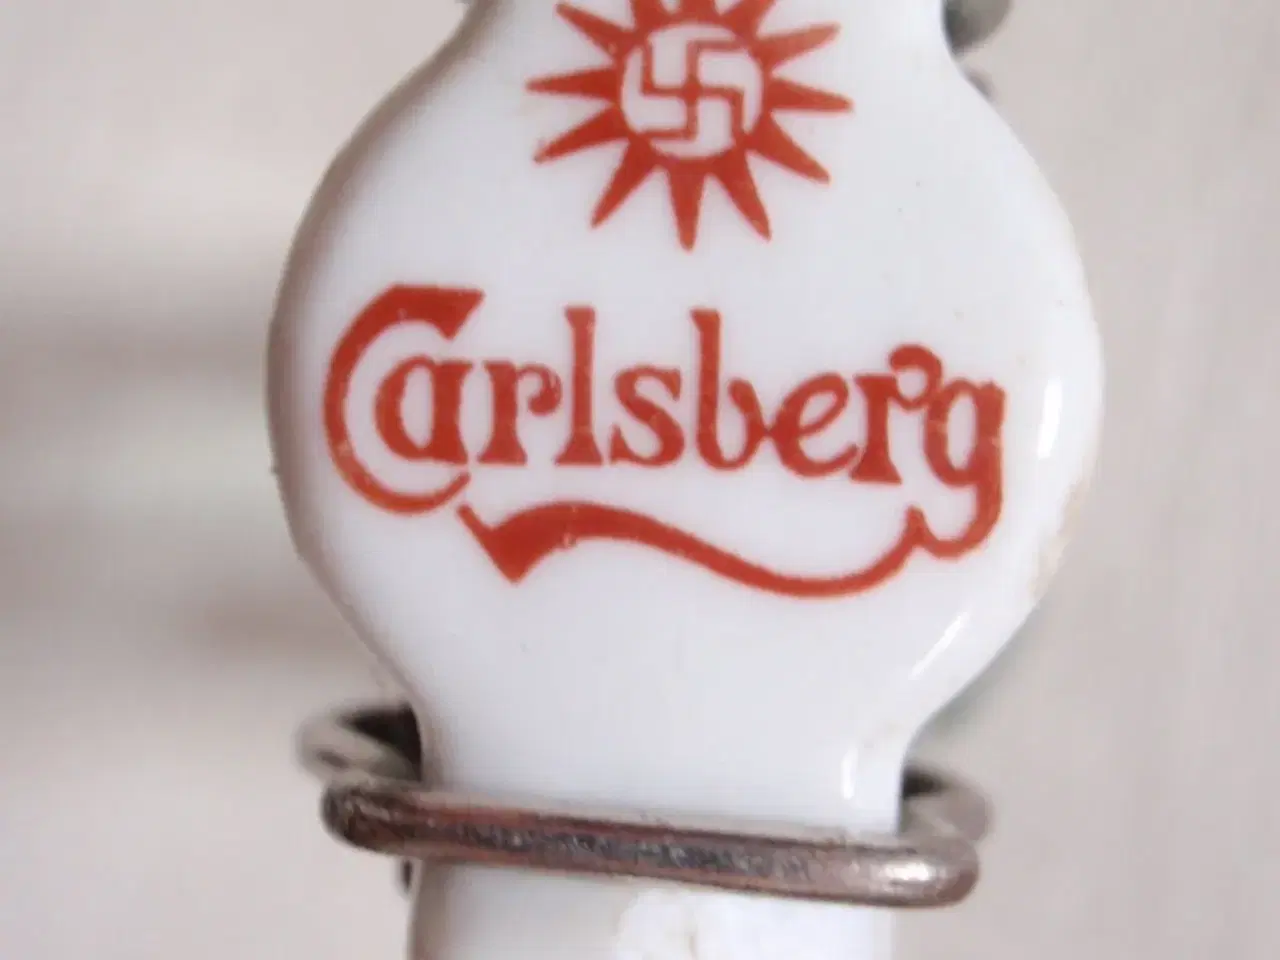 Billede 1 - Sodavand fl. Carlsberg m. hagekors.